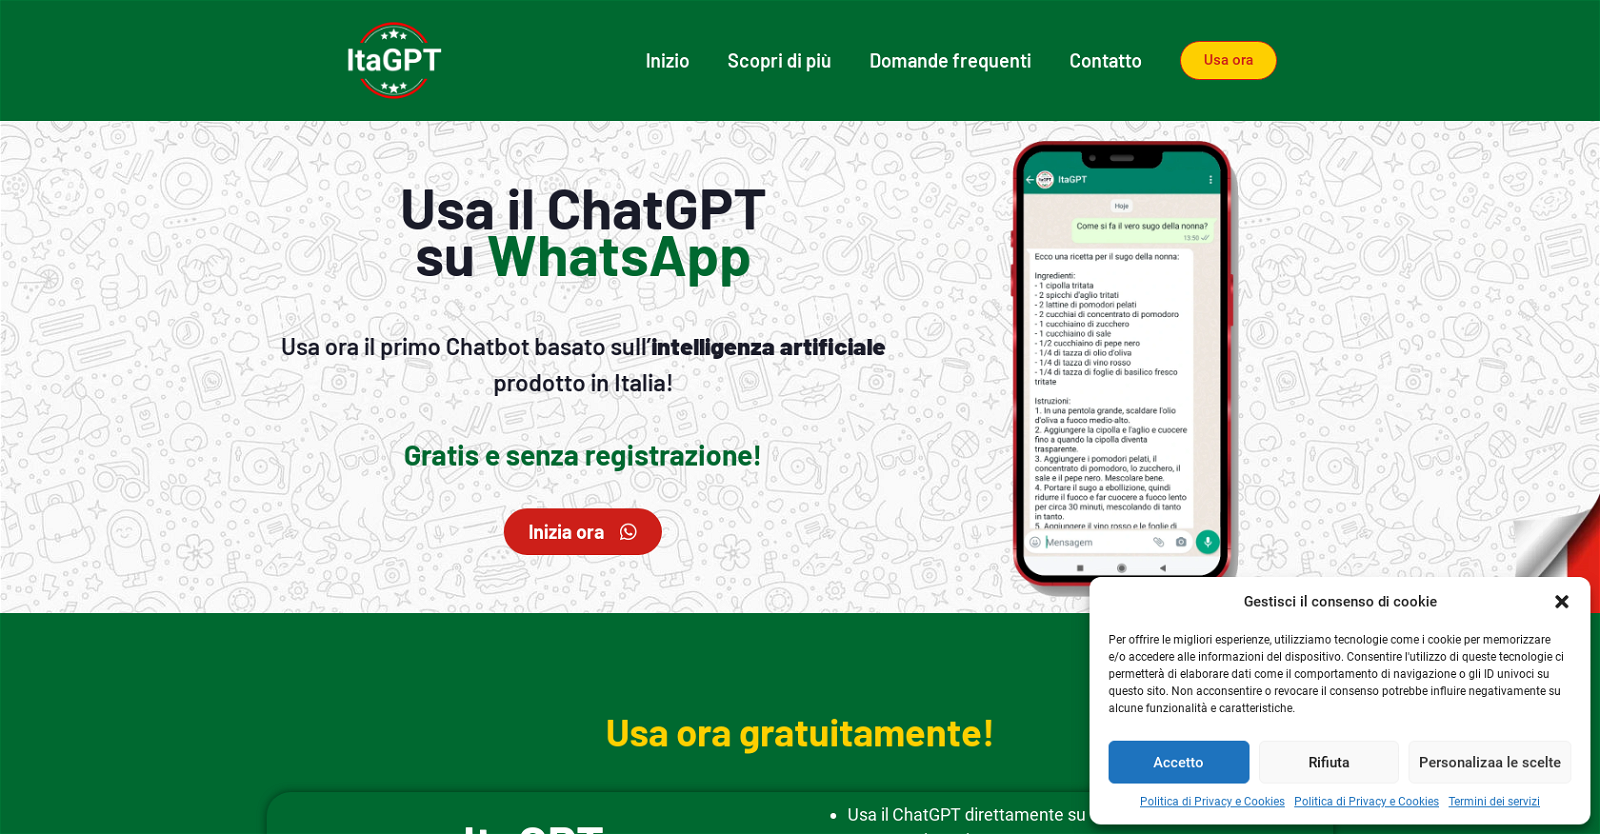 ItaGPT website